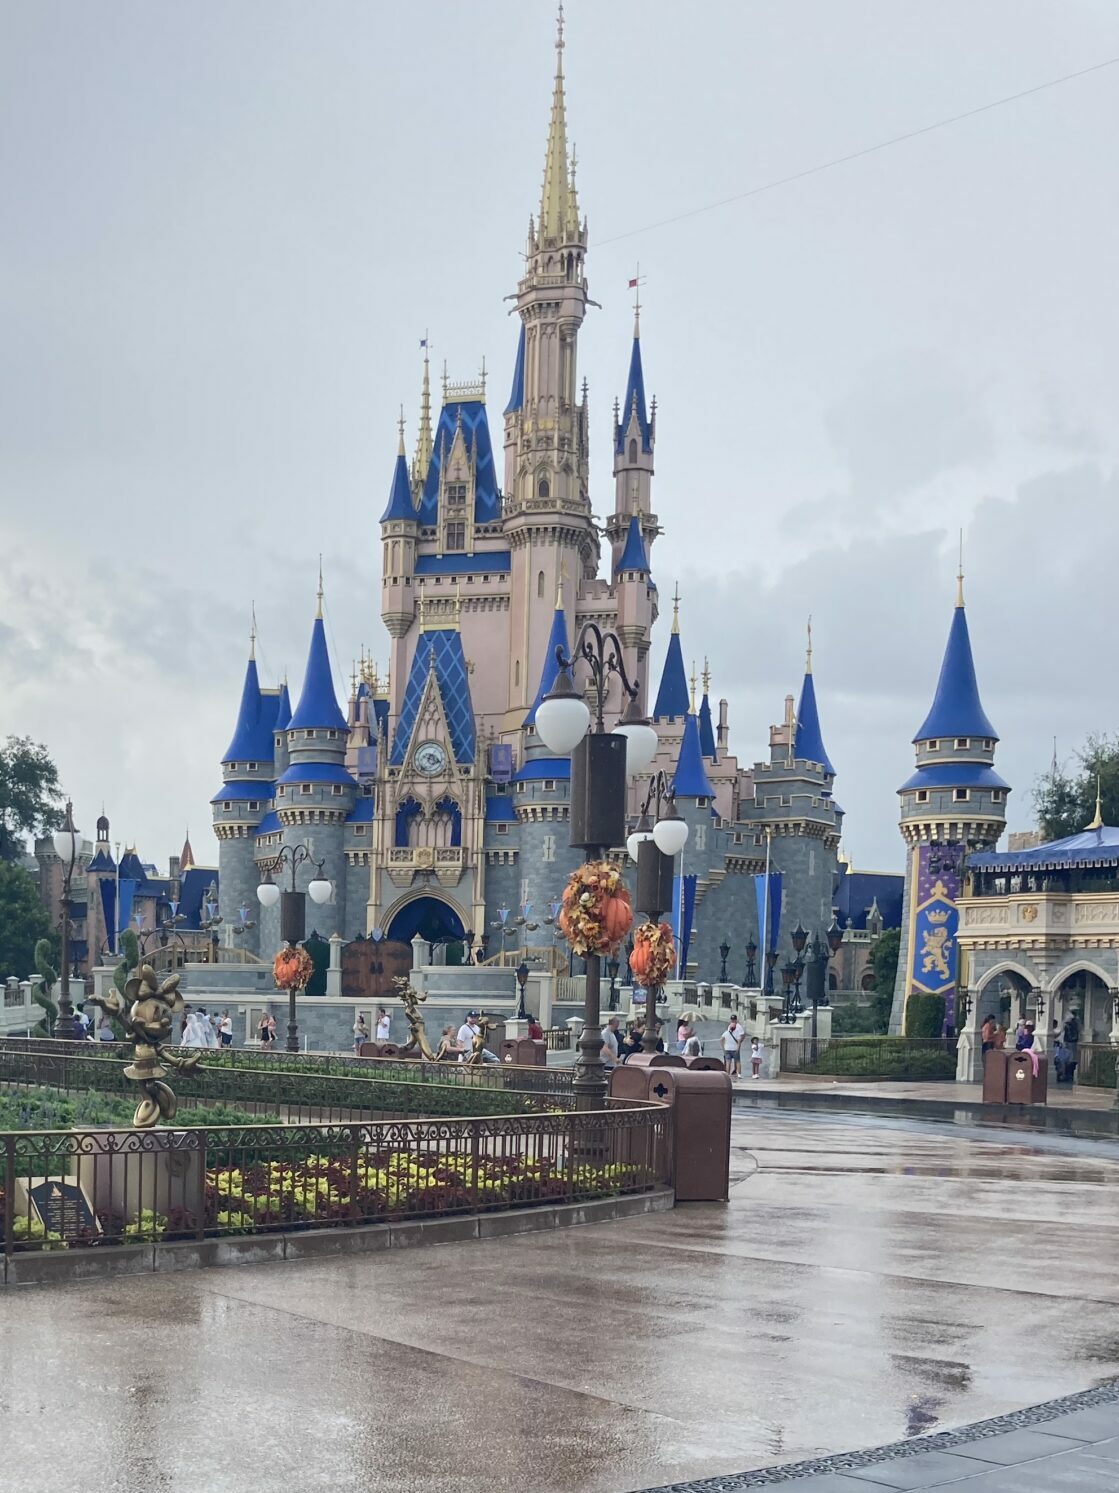 Cinderella's castle at disney world